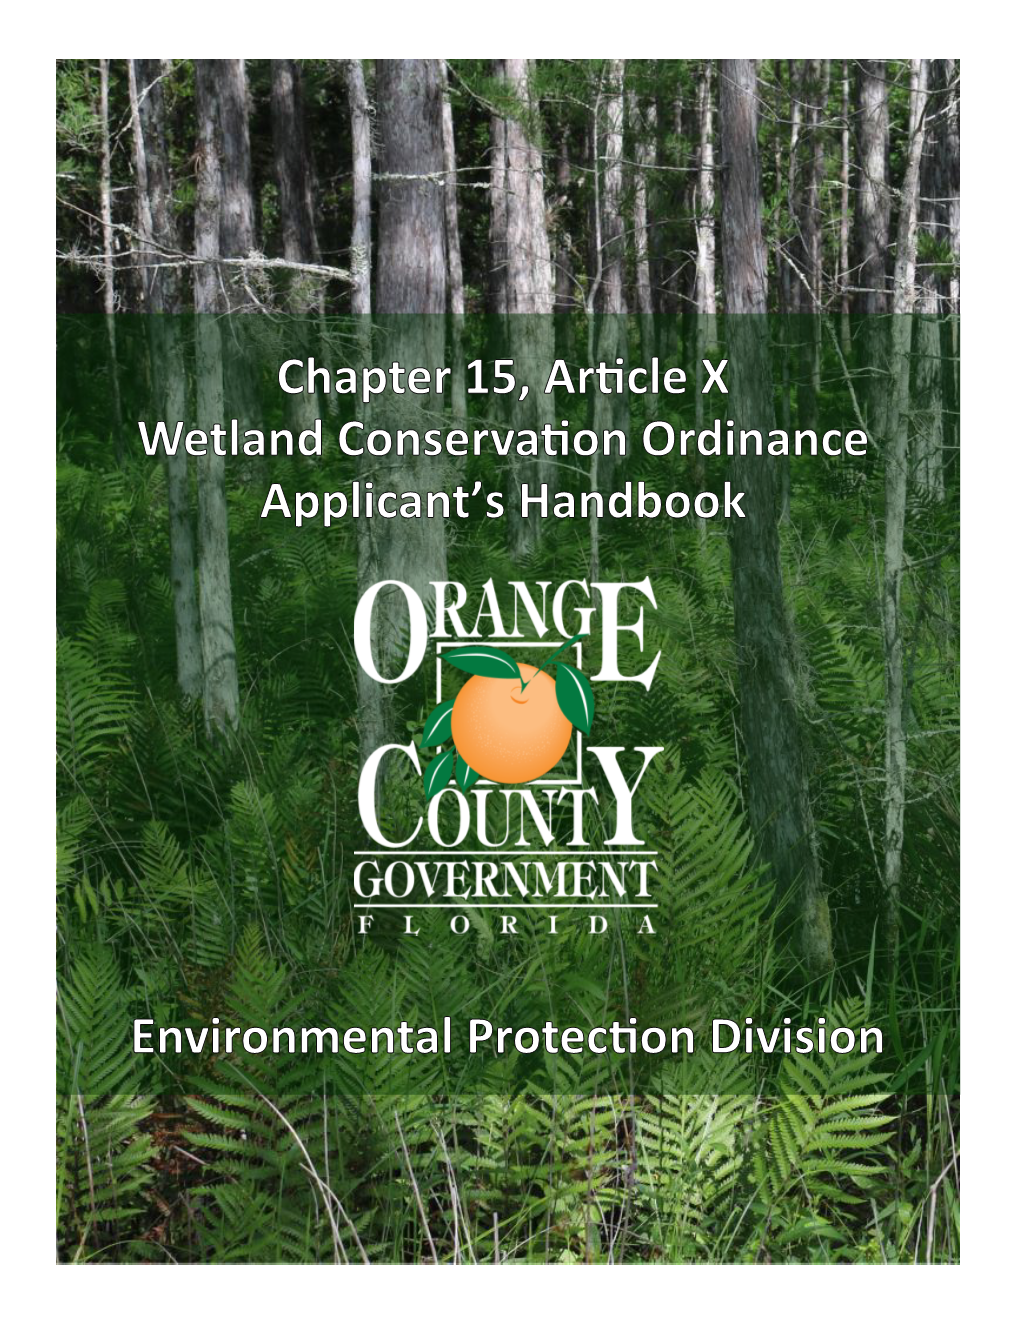 Chp 15, X Wetland Permit Applicant's Handbook